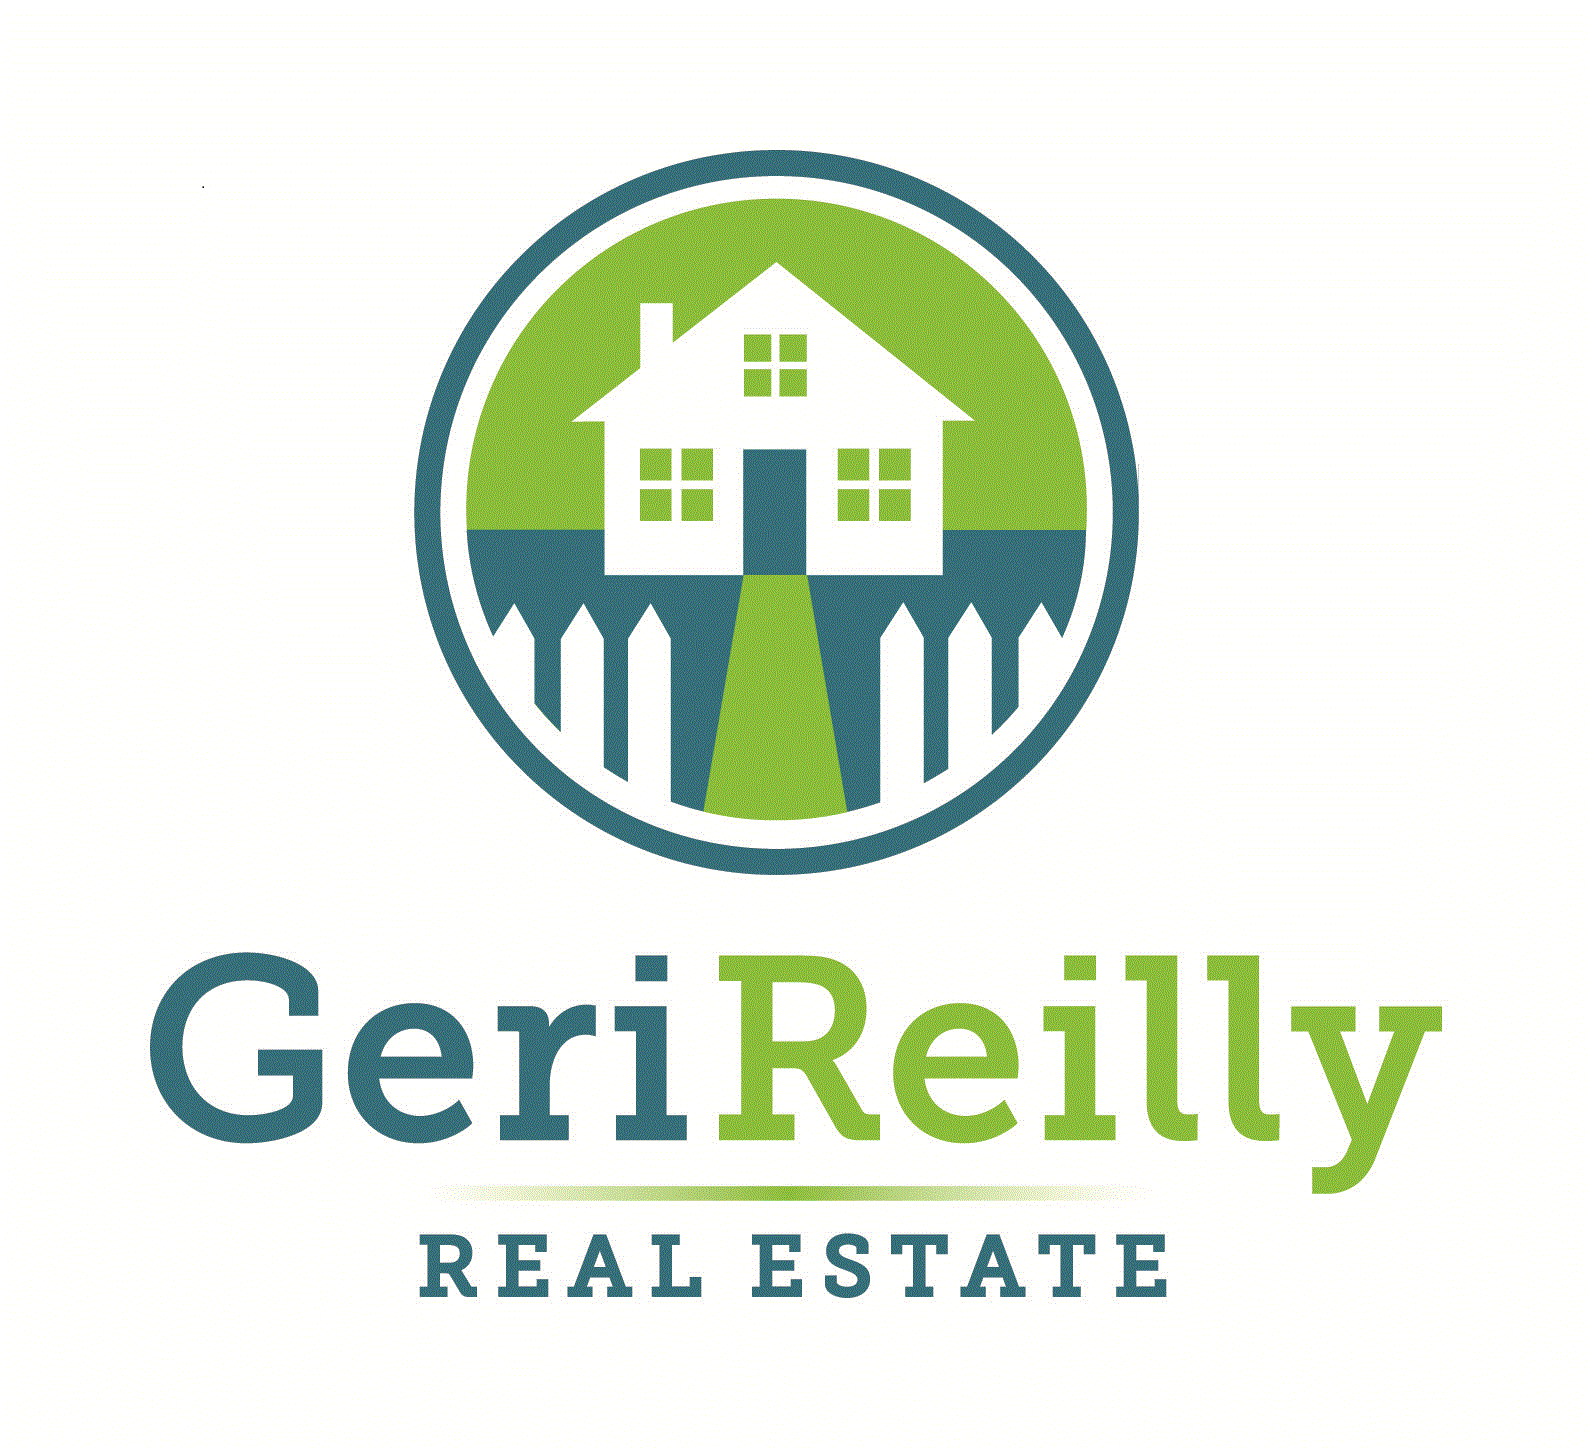 Realty s. Real Estate logo. Da real Estate лого. Логотип недвижимость на юге. Contact real Estate логотип.